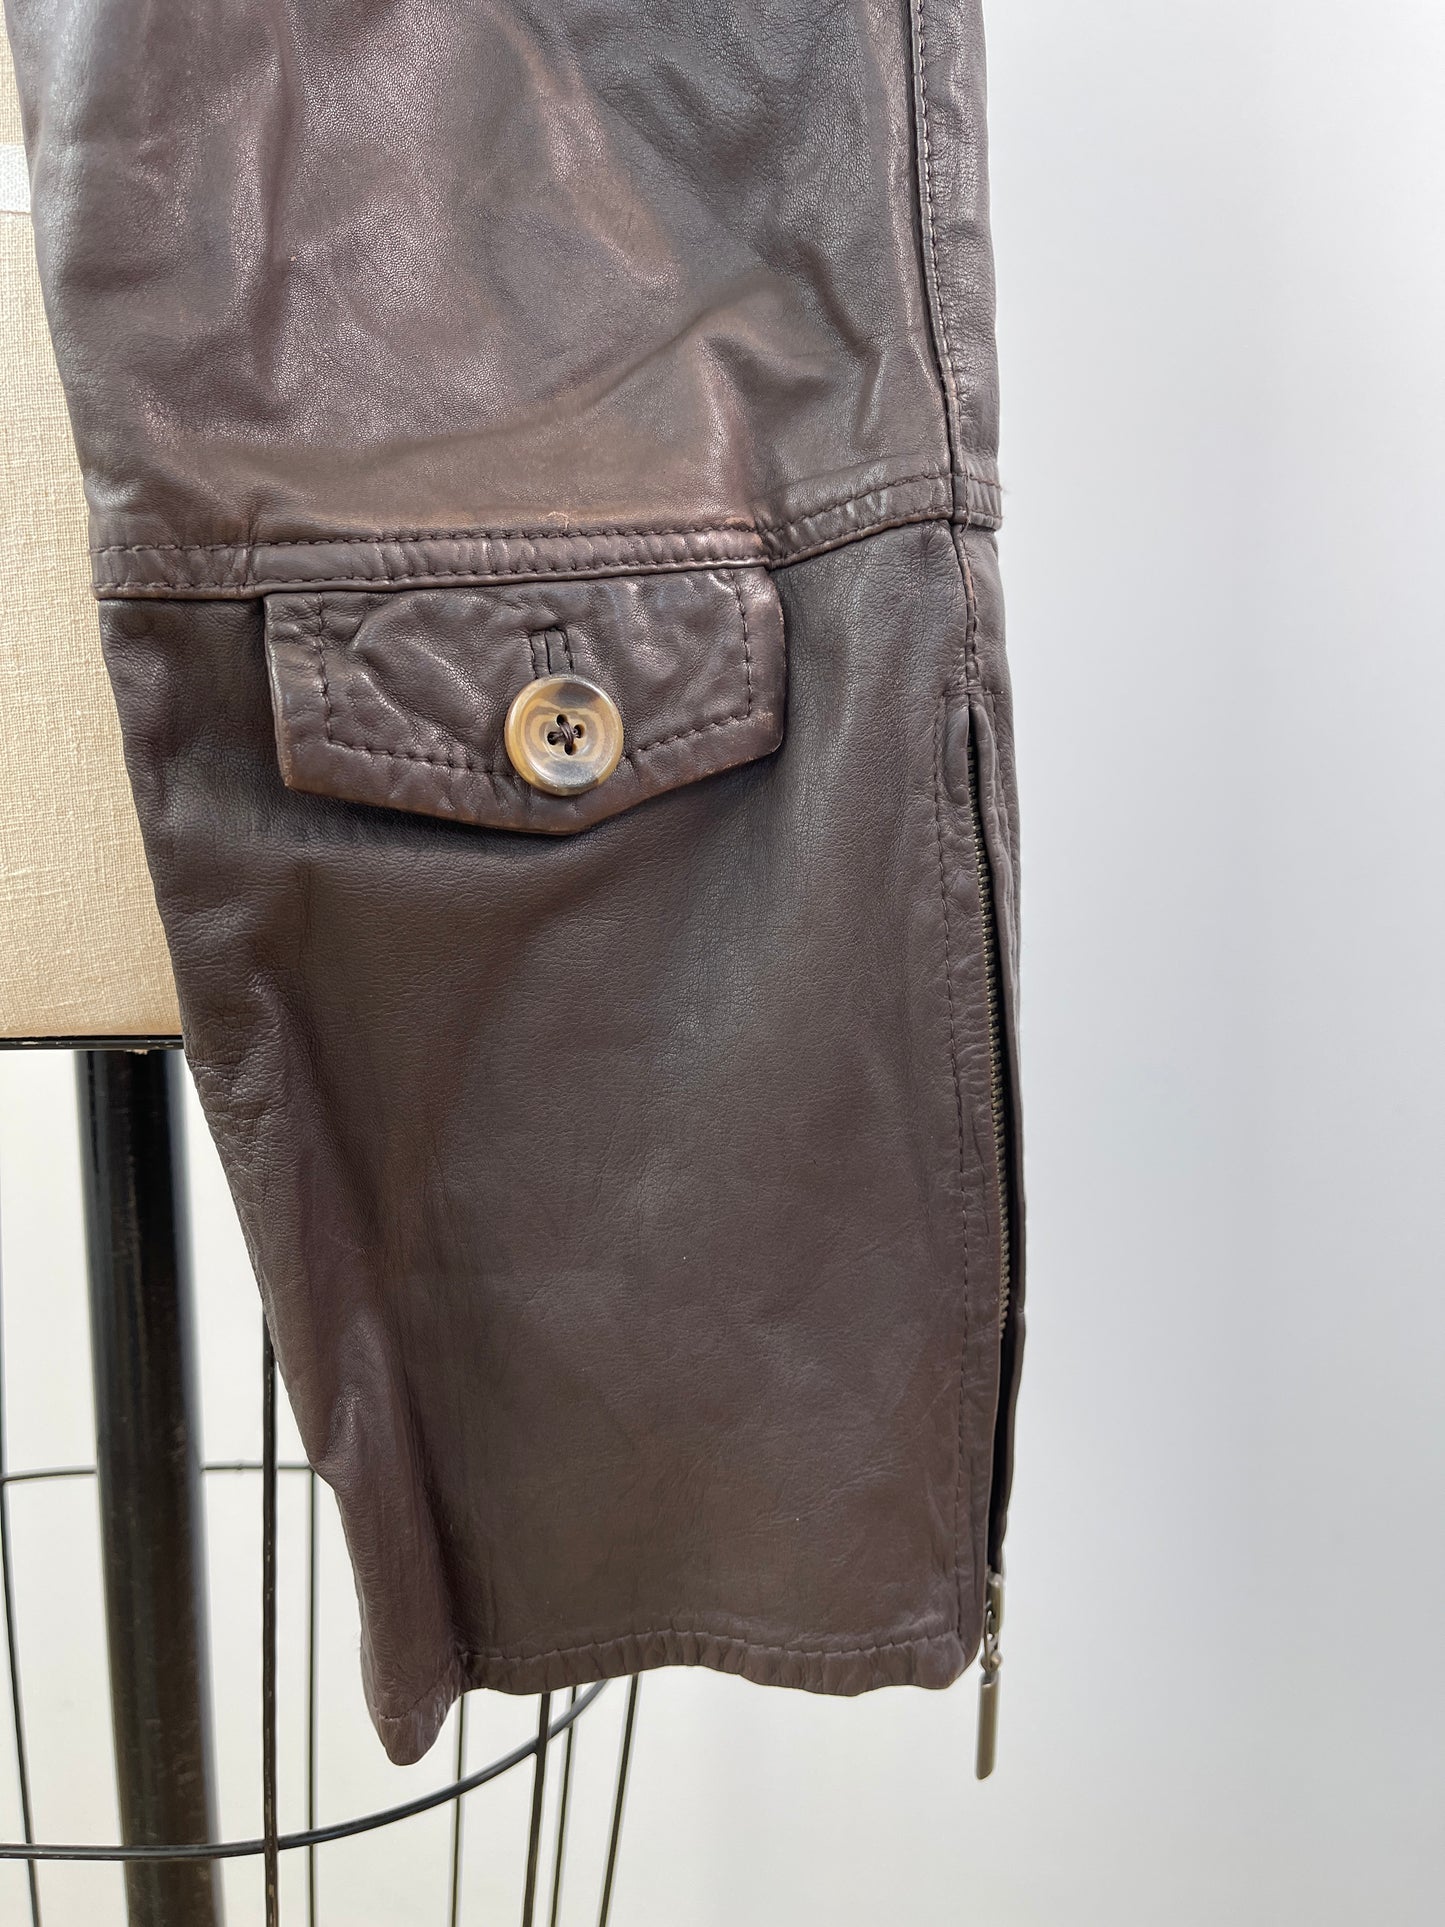 Pantalon taille basse chocolat en cuir (S)